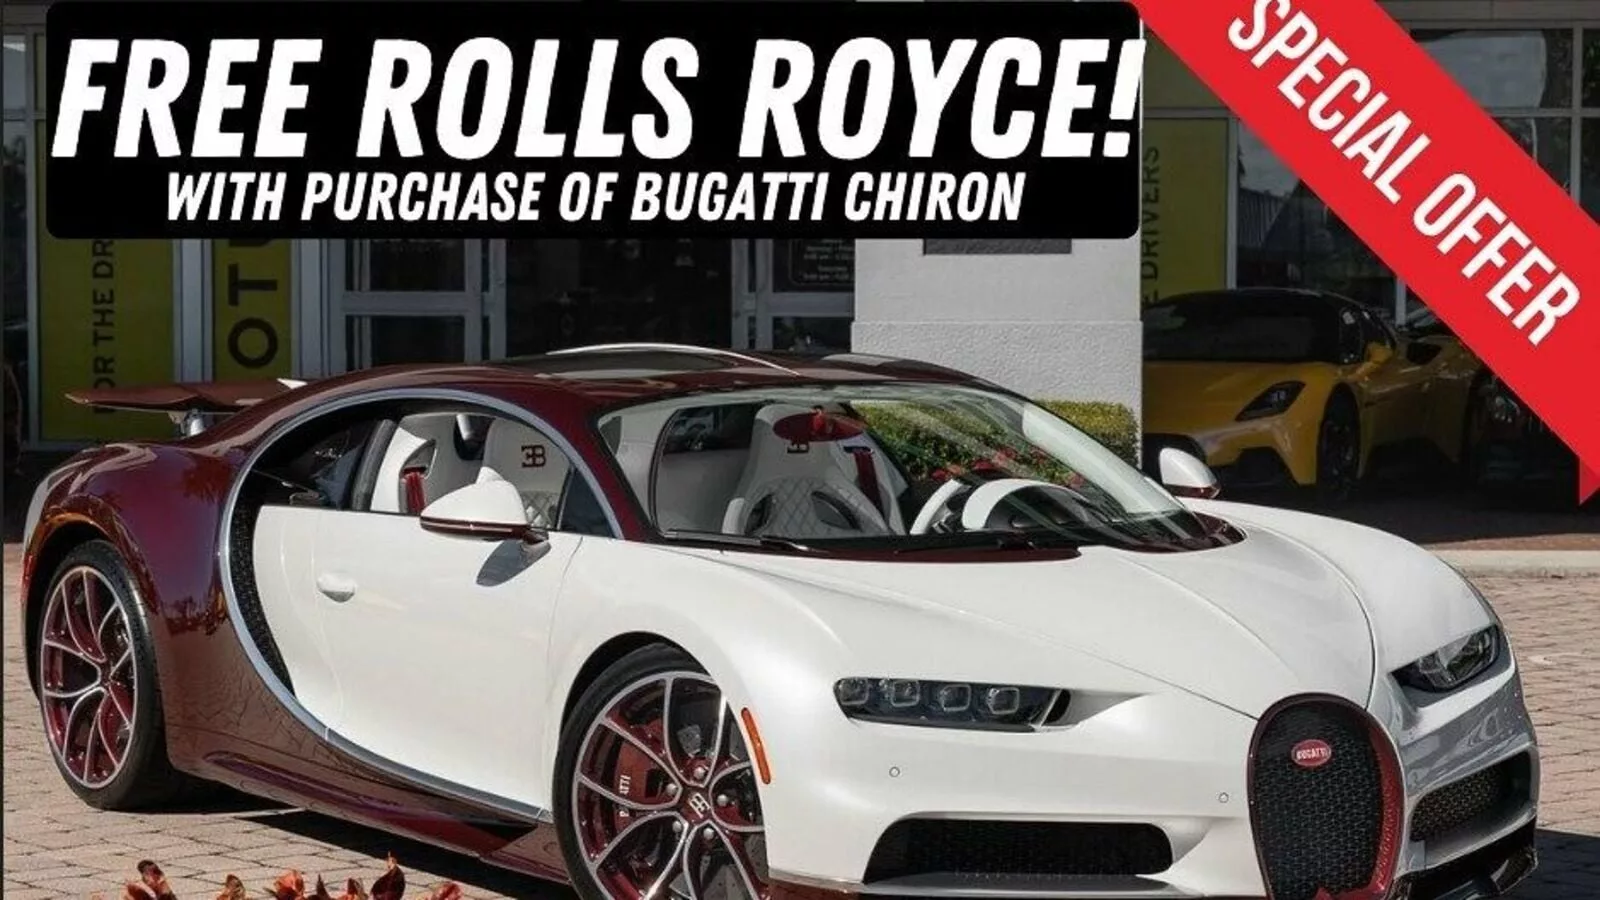 Buy Bugatti, get Rolls-Royce for free: US dealership offers insane deal